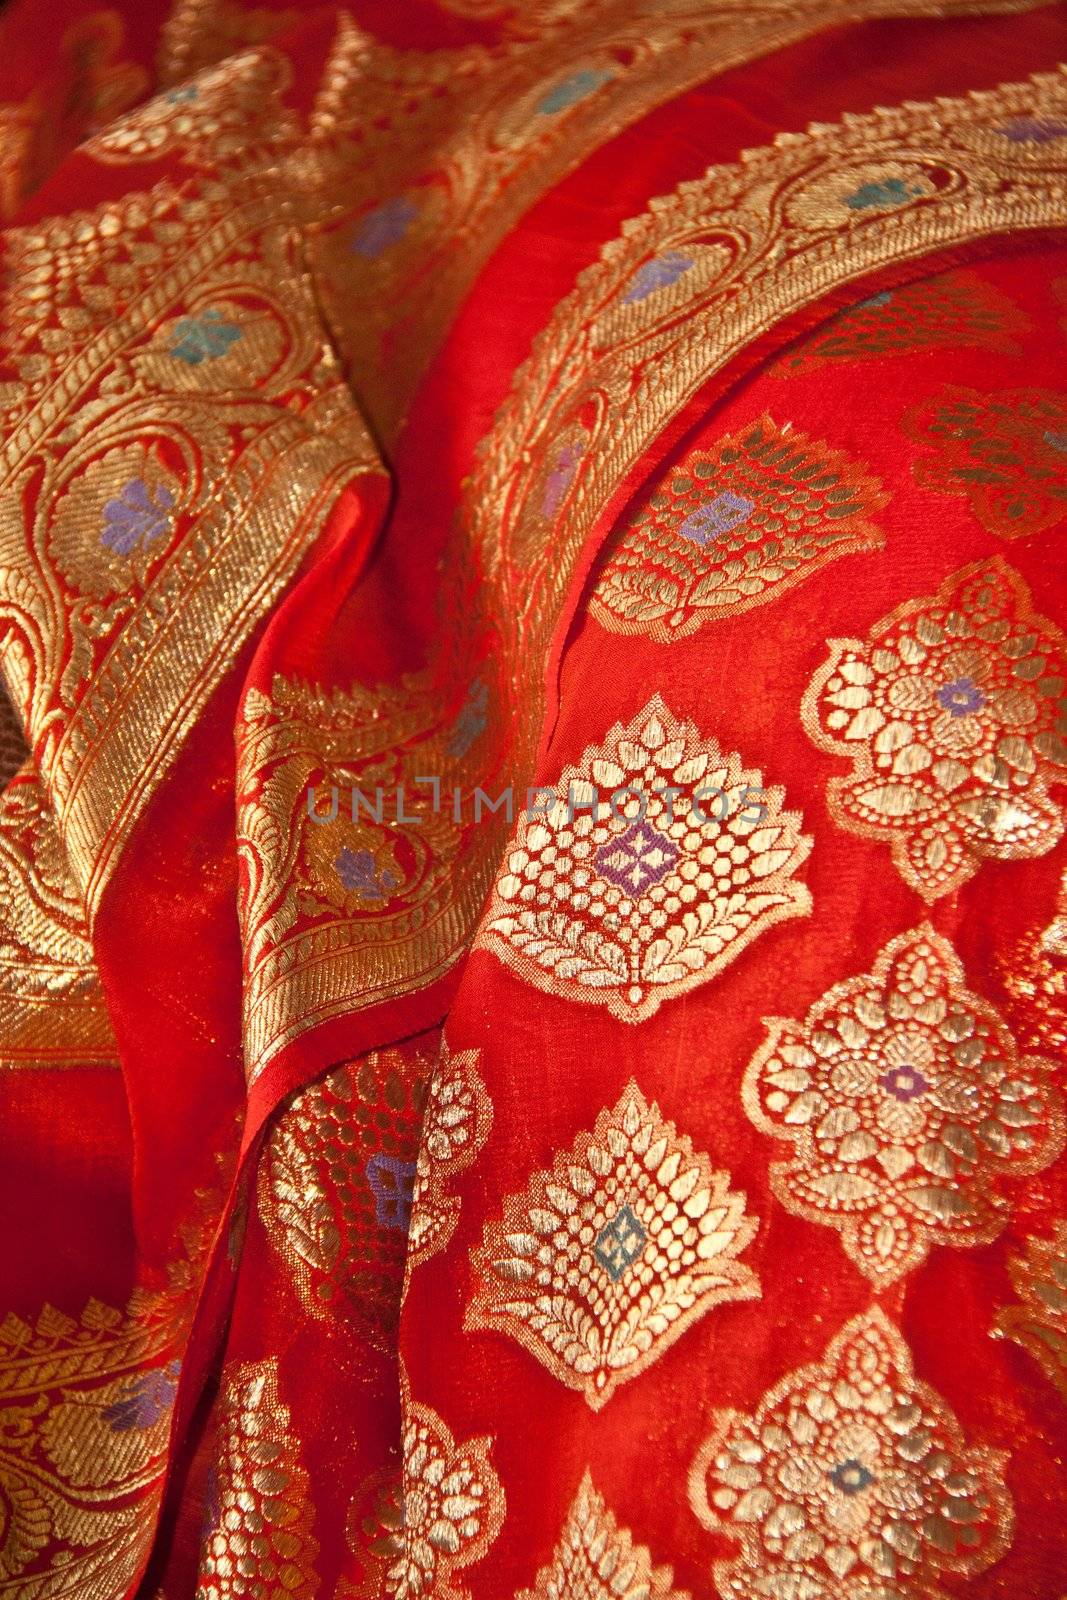 an Indian Sari with orange fabric and Gold thread